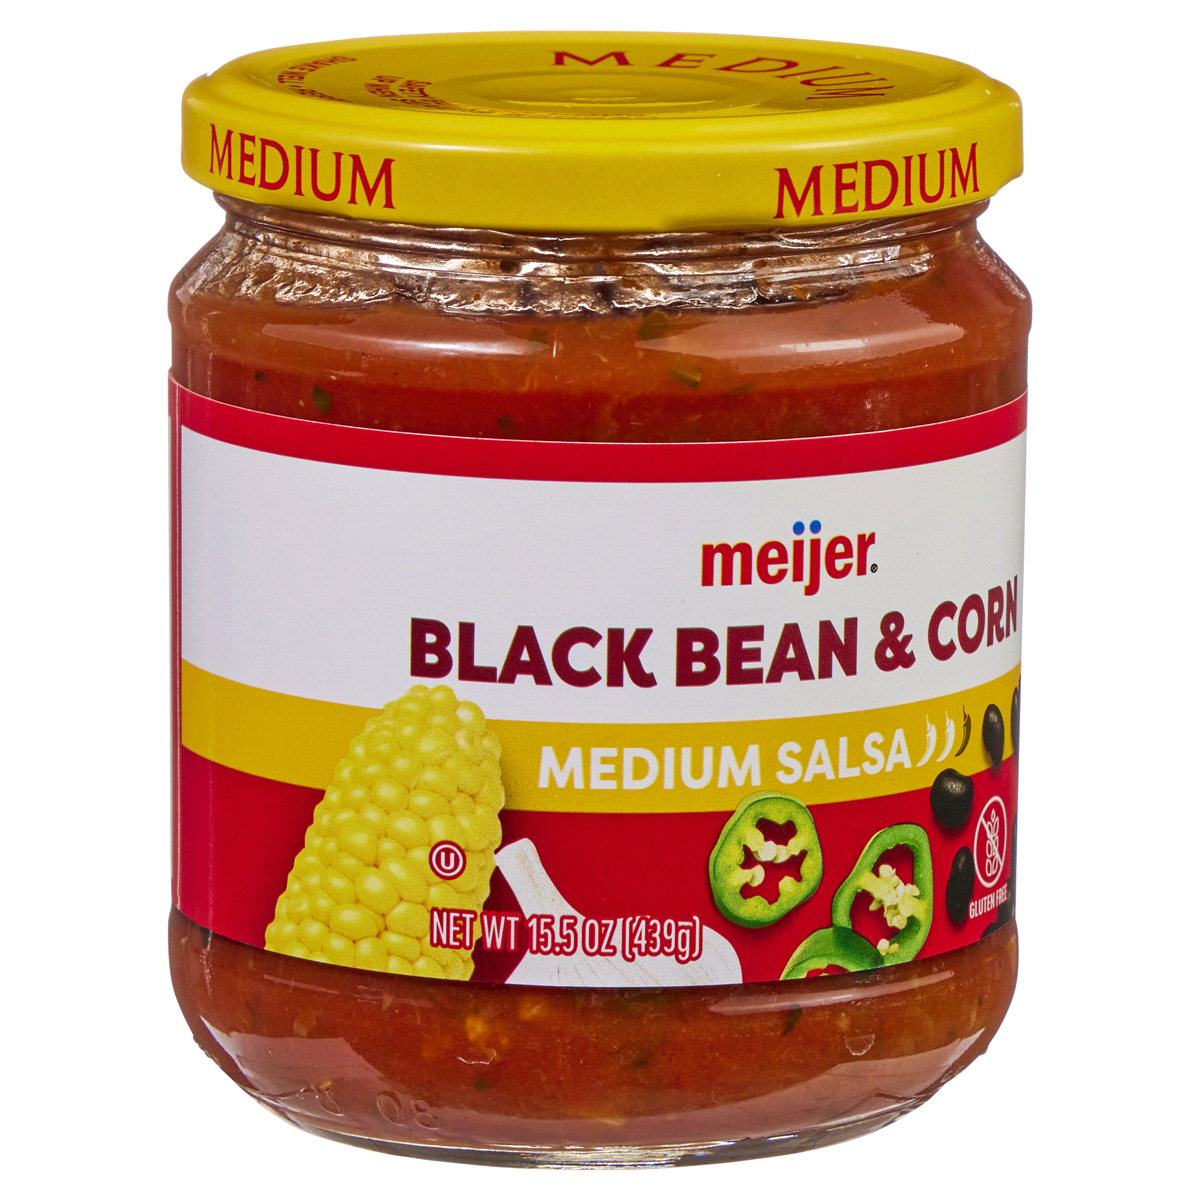 slide 9 of 29, Meijer Medium Black Bean & Corn Salsa, 15.50 oz